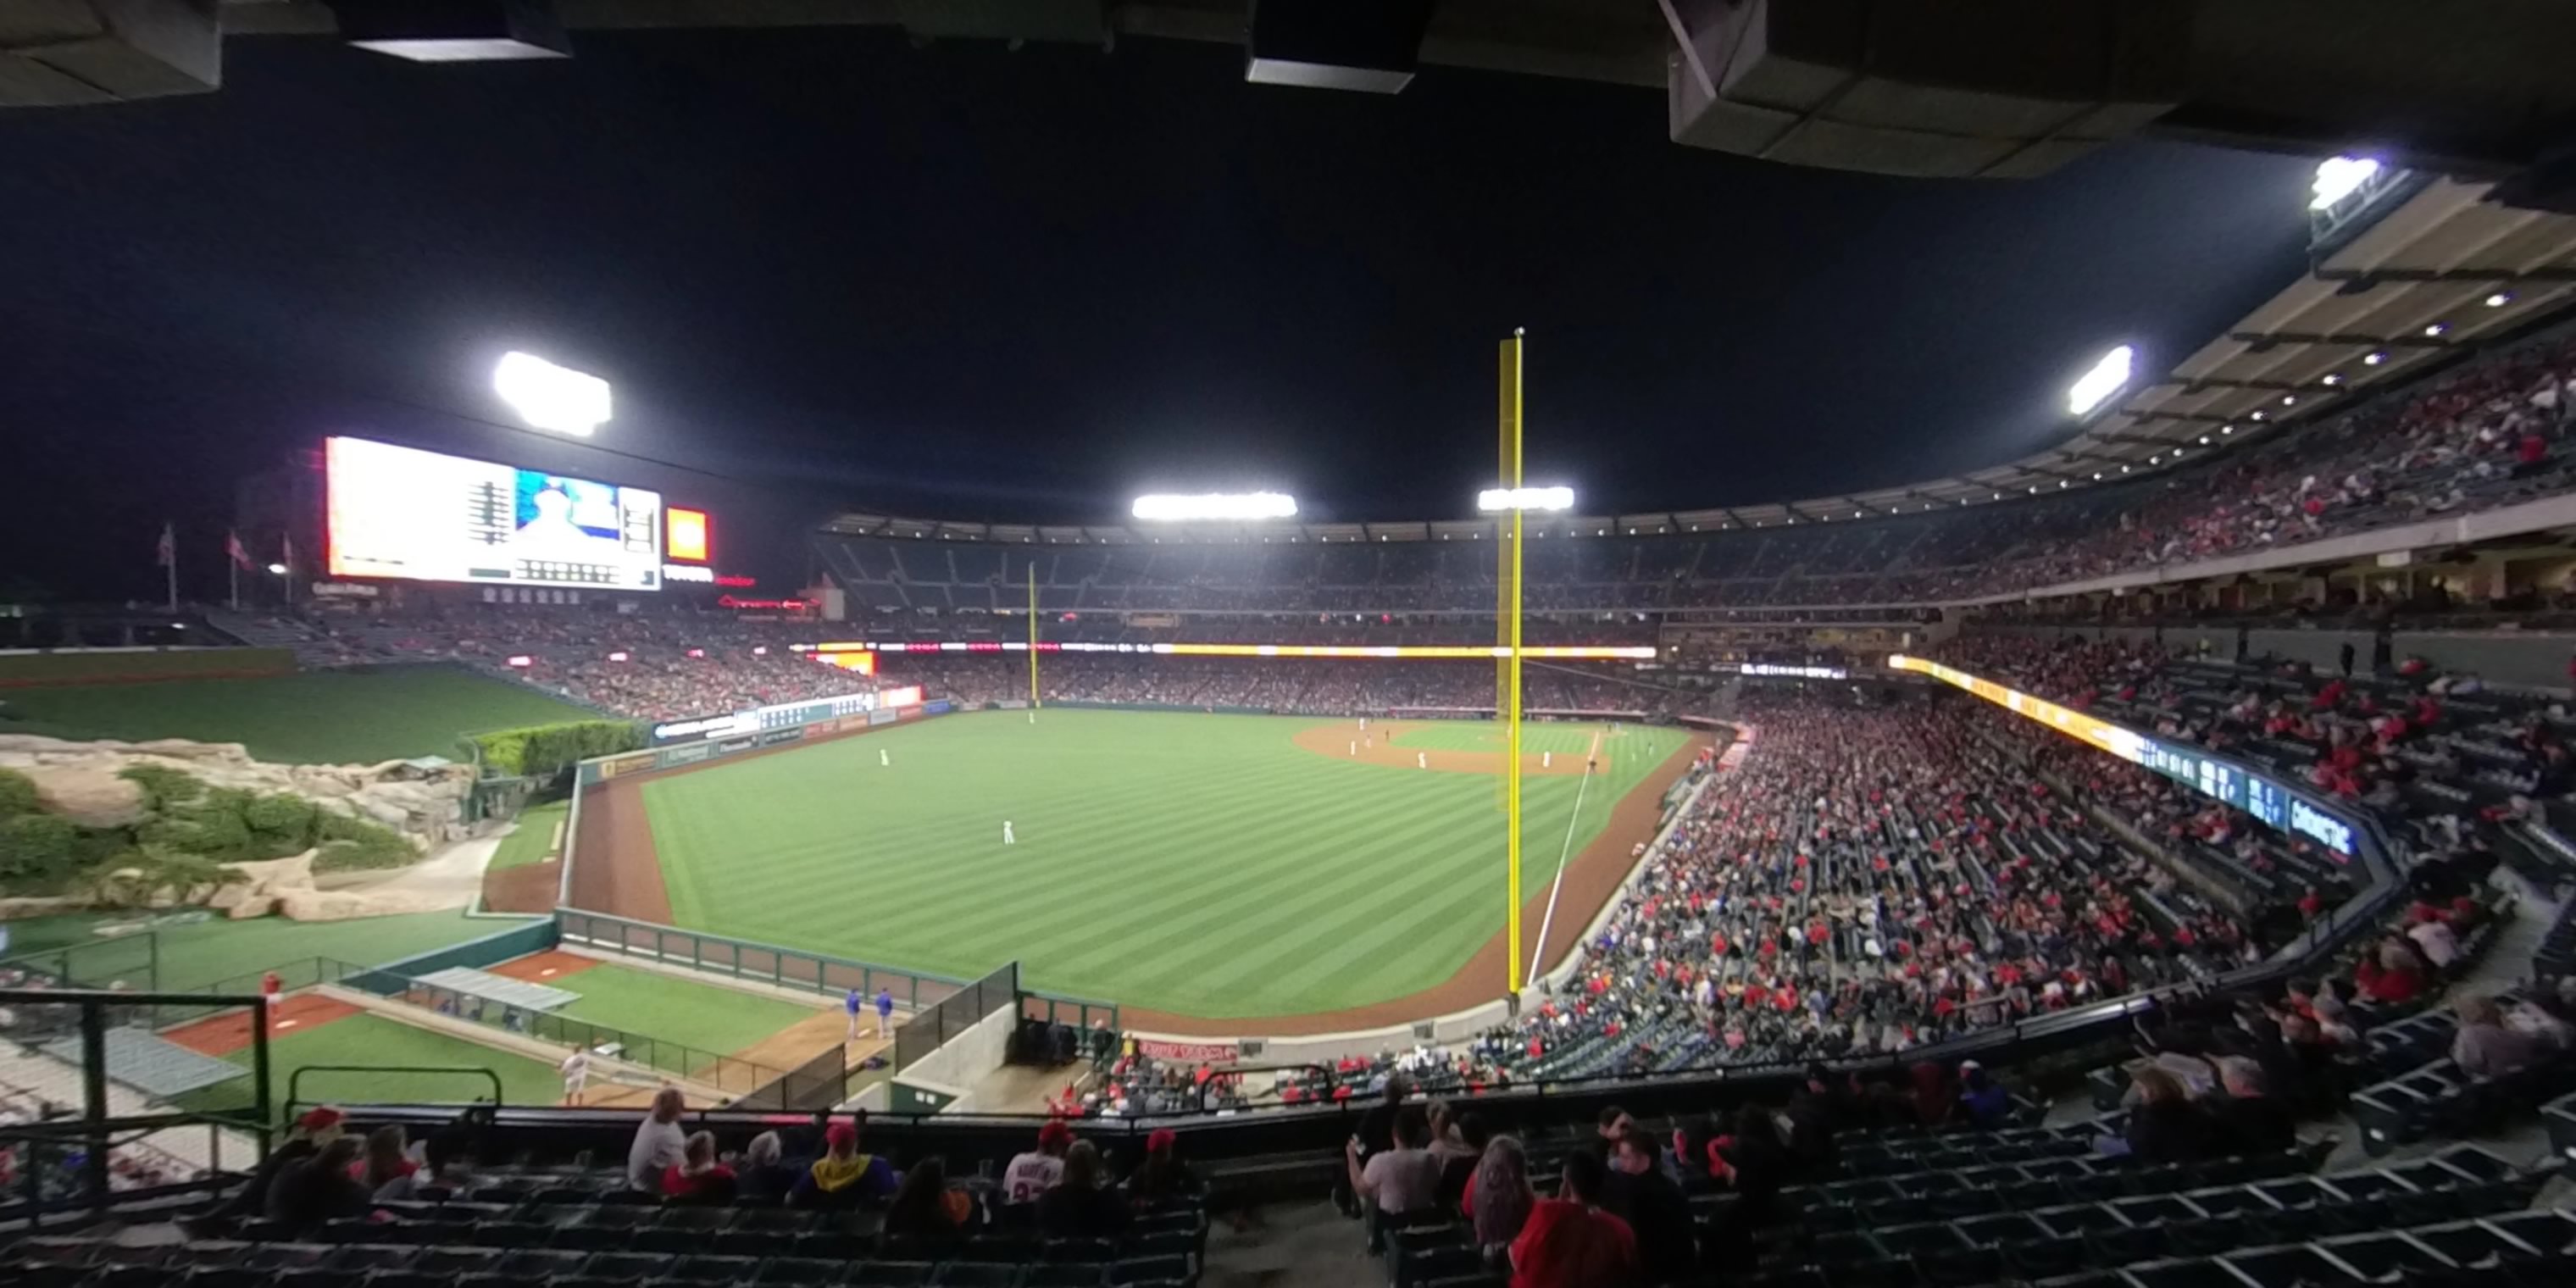 section 301 panoramic seat view  - angel stadium